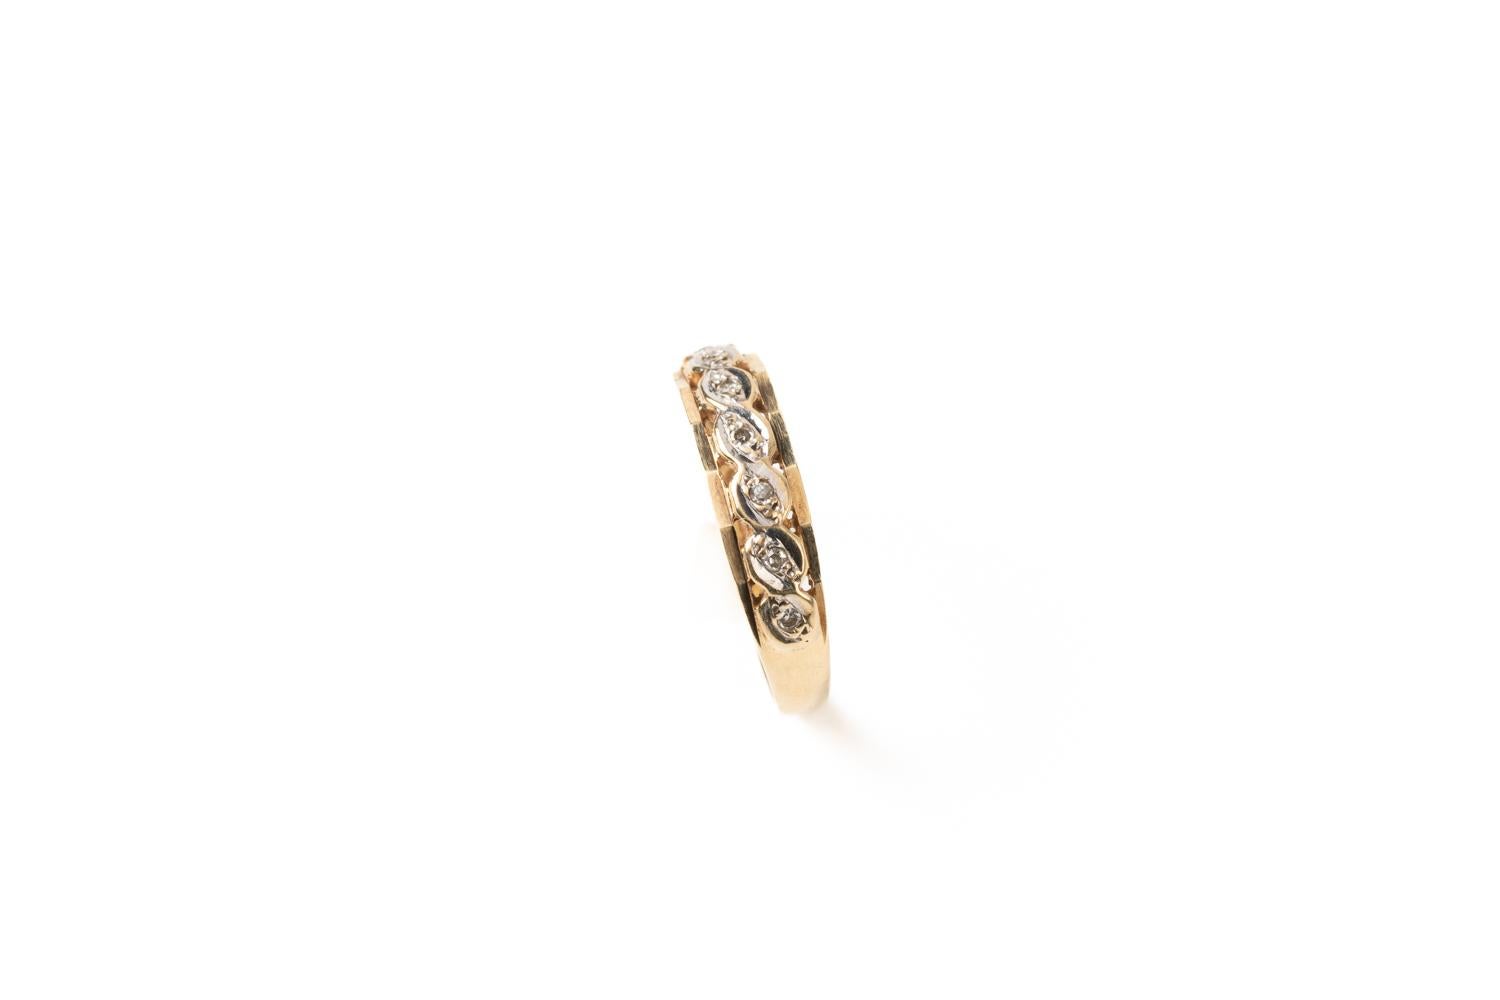 Vintage Art Deco Style 9 Carat Diamond and Platinium Ring For Sale 2